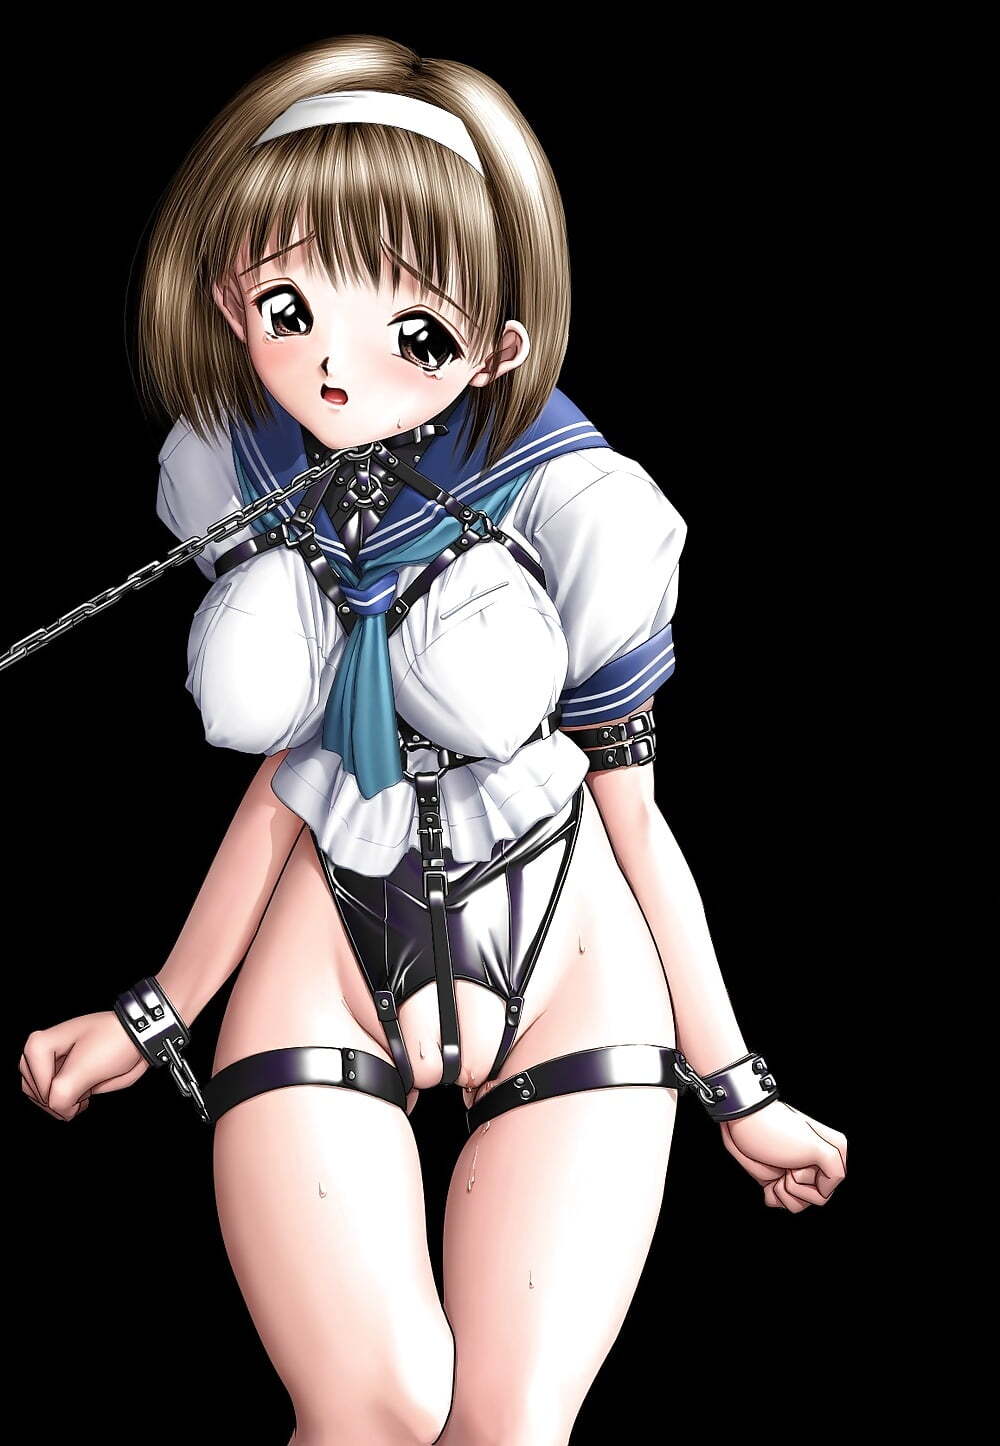 Hentai pics # 1 (Bondage,BDSM)